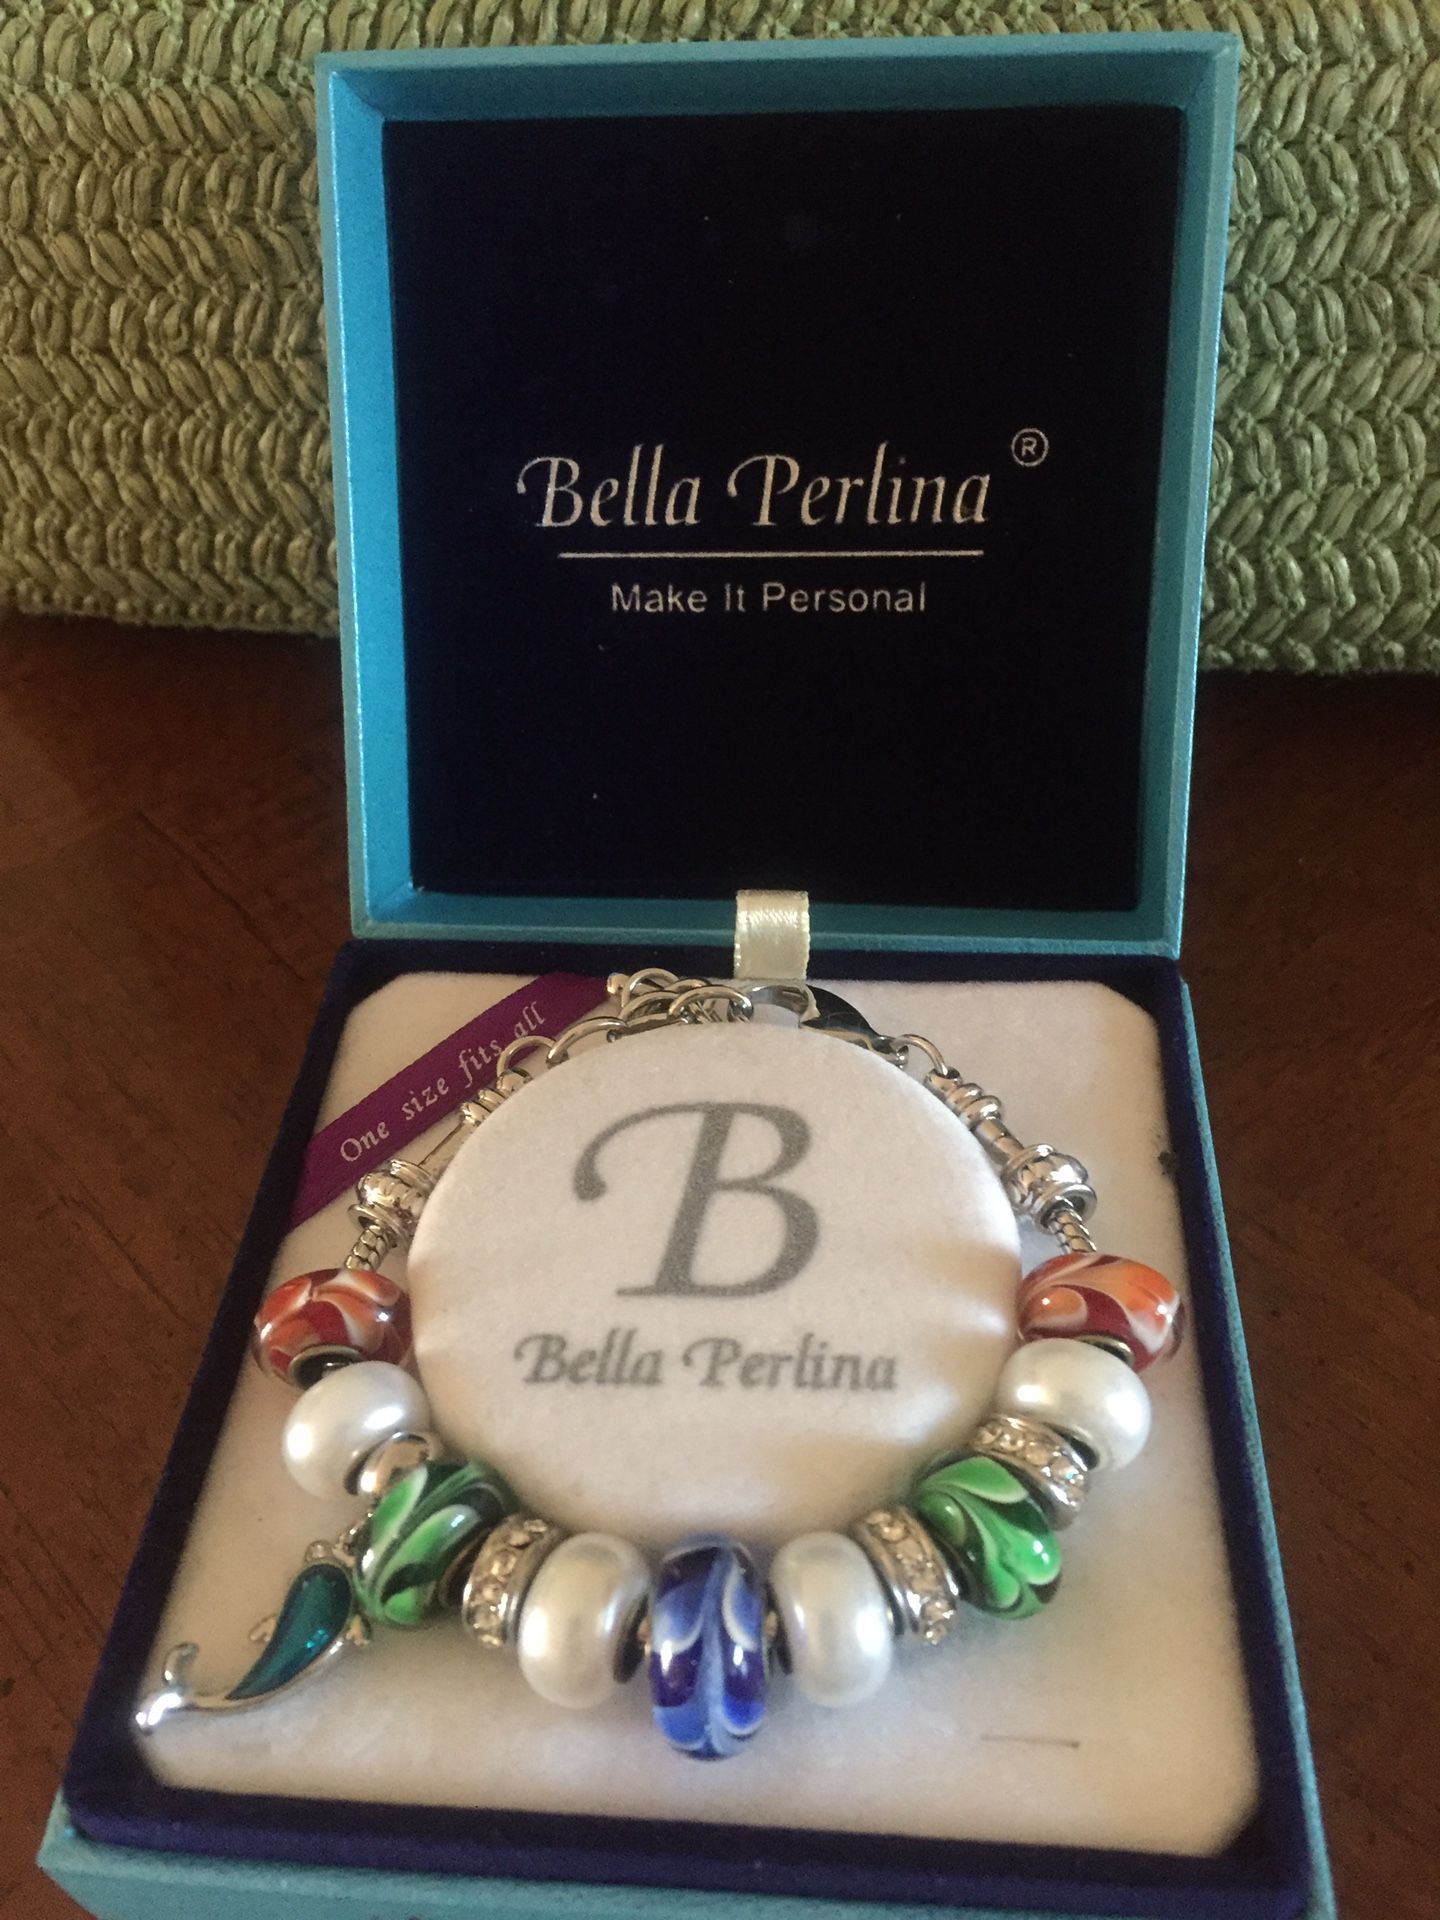 Bella Perlina charm bracelet.